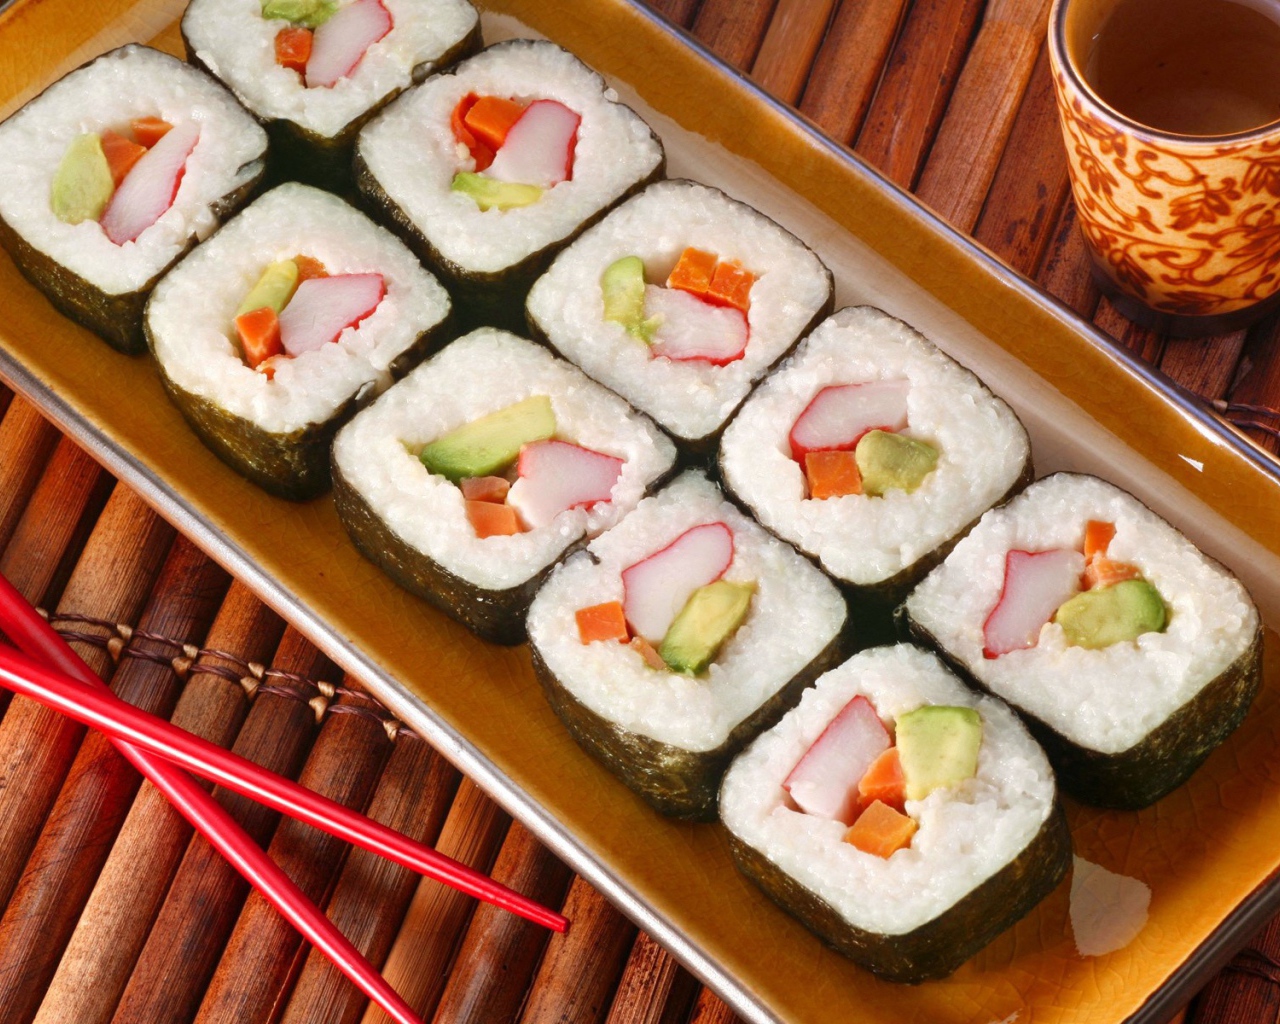 Square sushi rolls